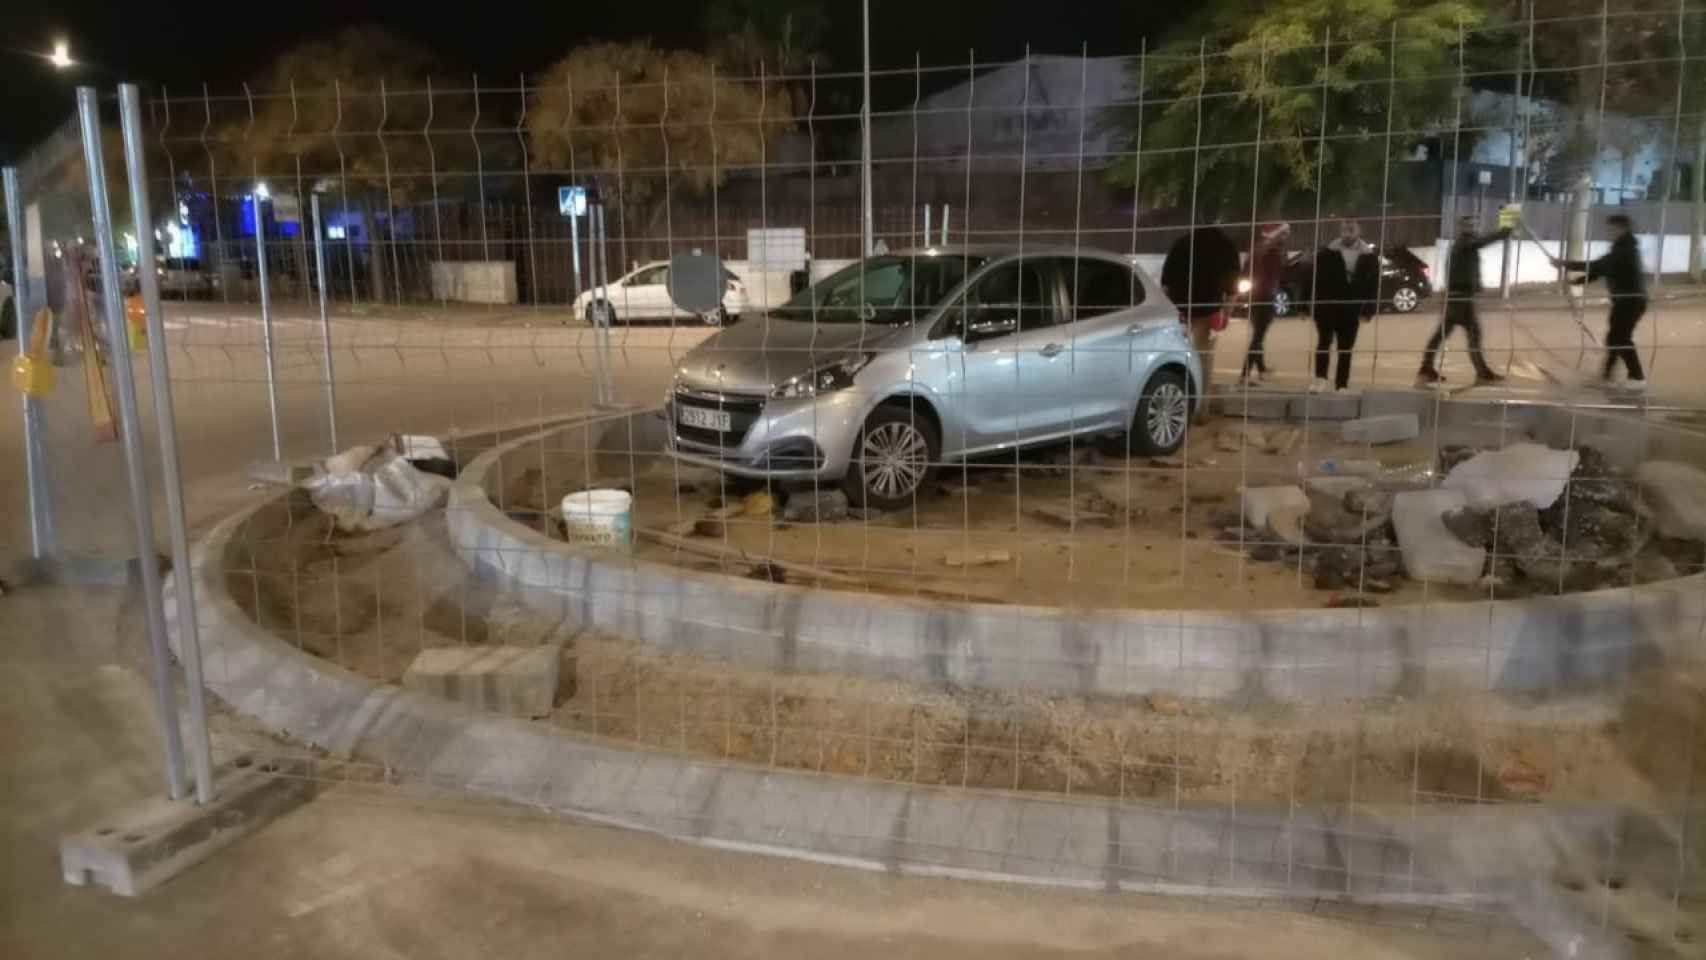 El coche accidentado encima de la rotonda en Mataró / RRSS